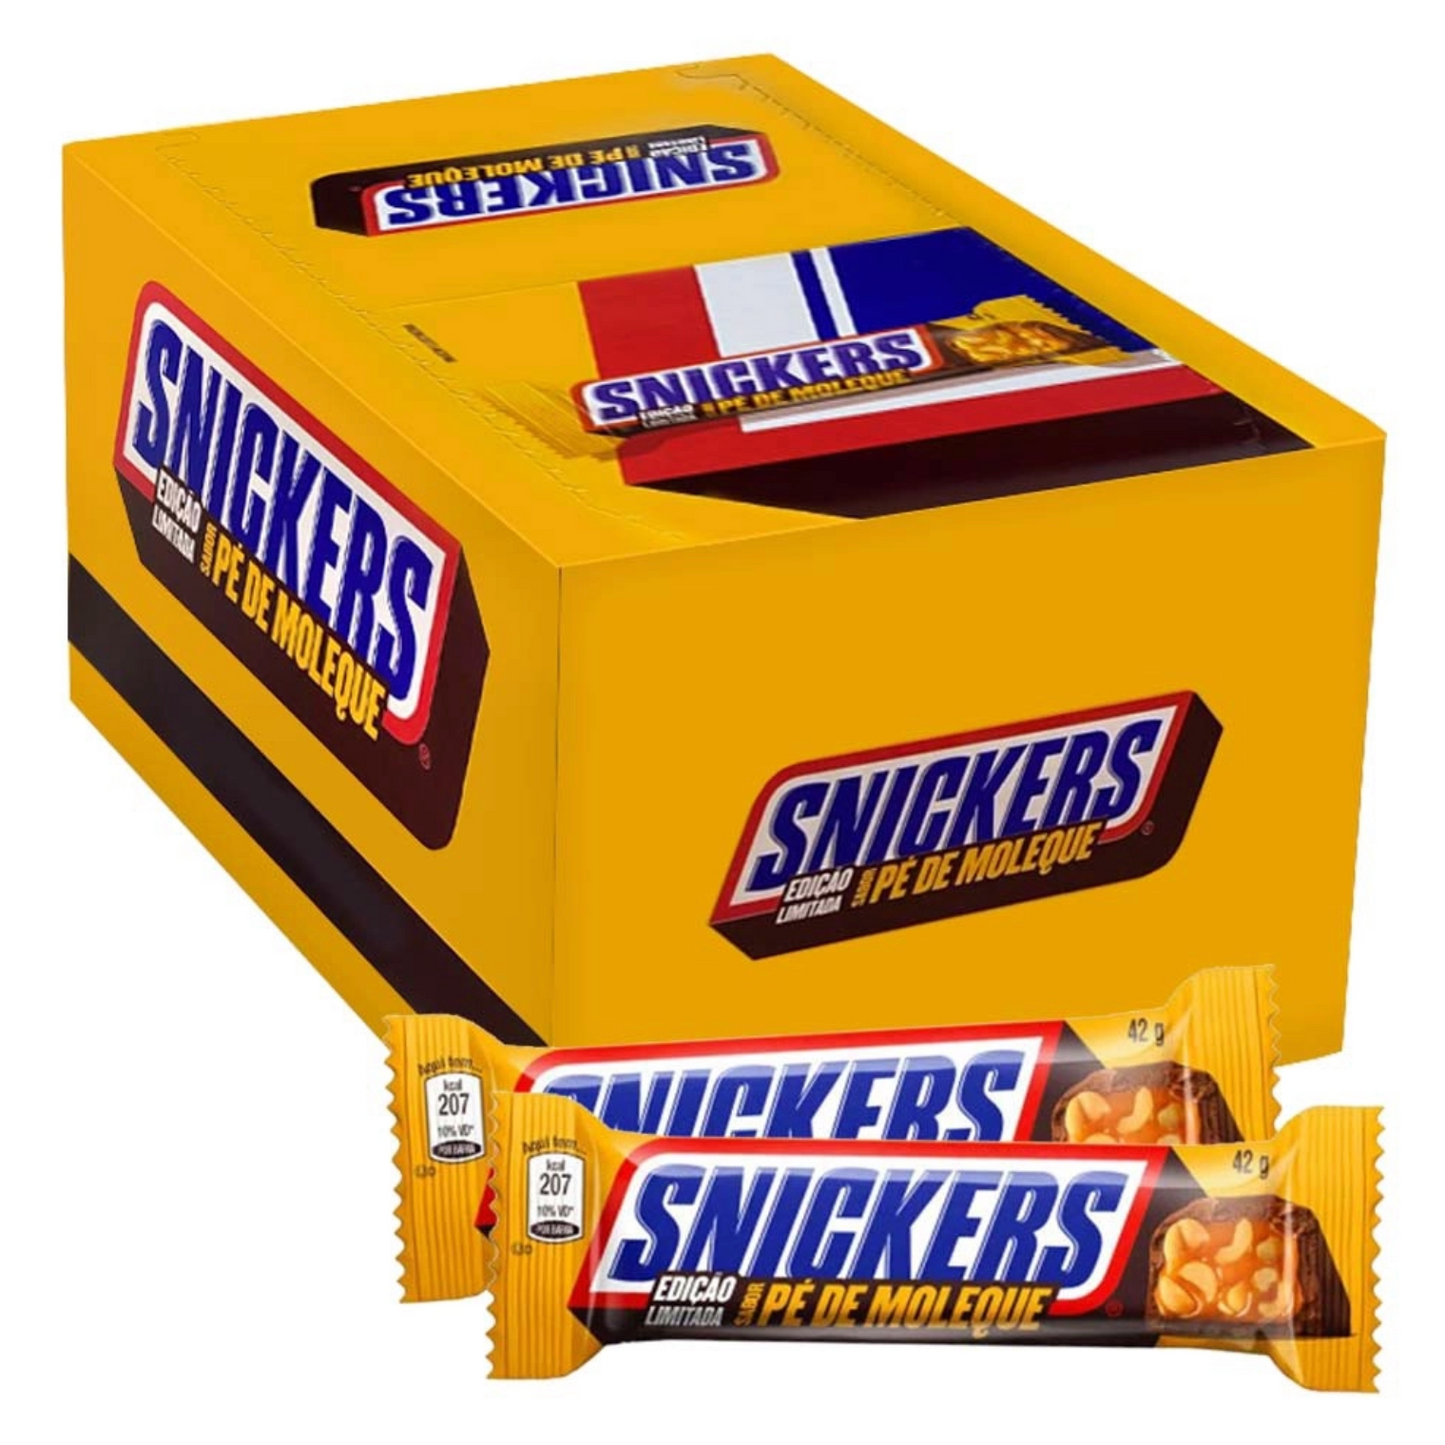 Snickers Pe De Moleque Candy Bars (42g) (20ct.)